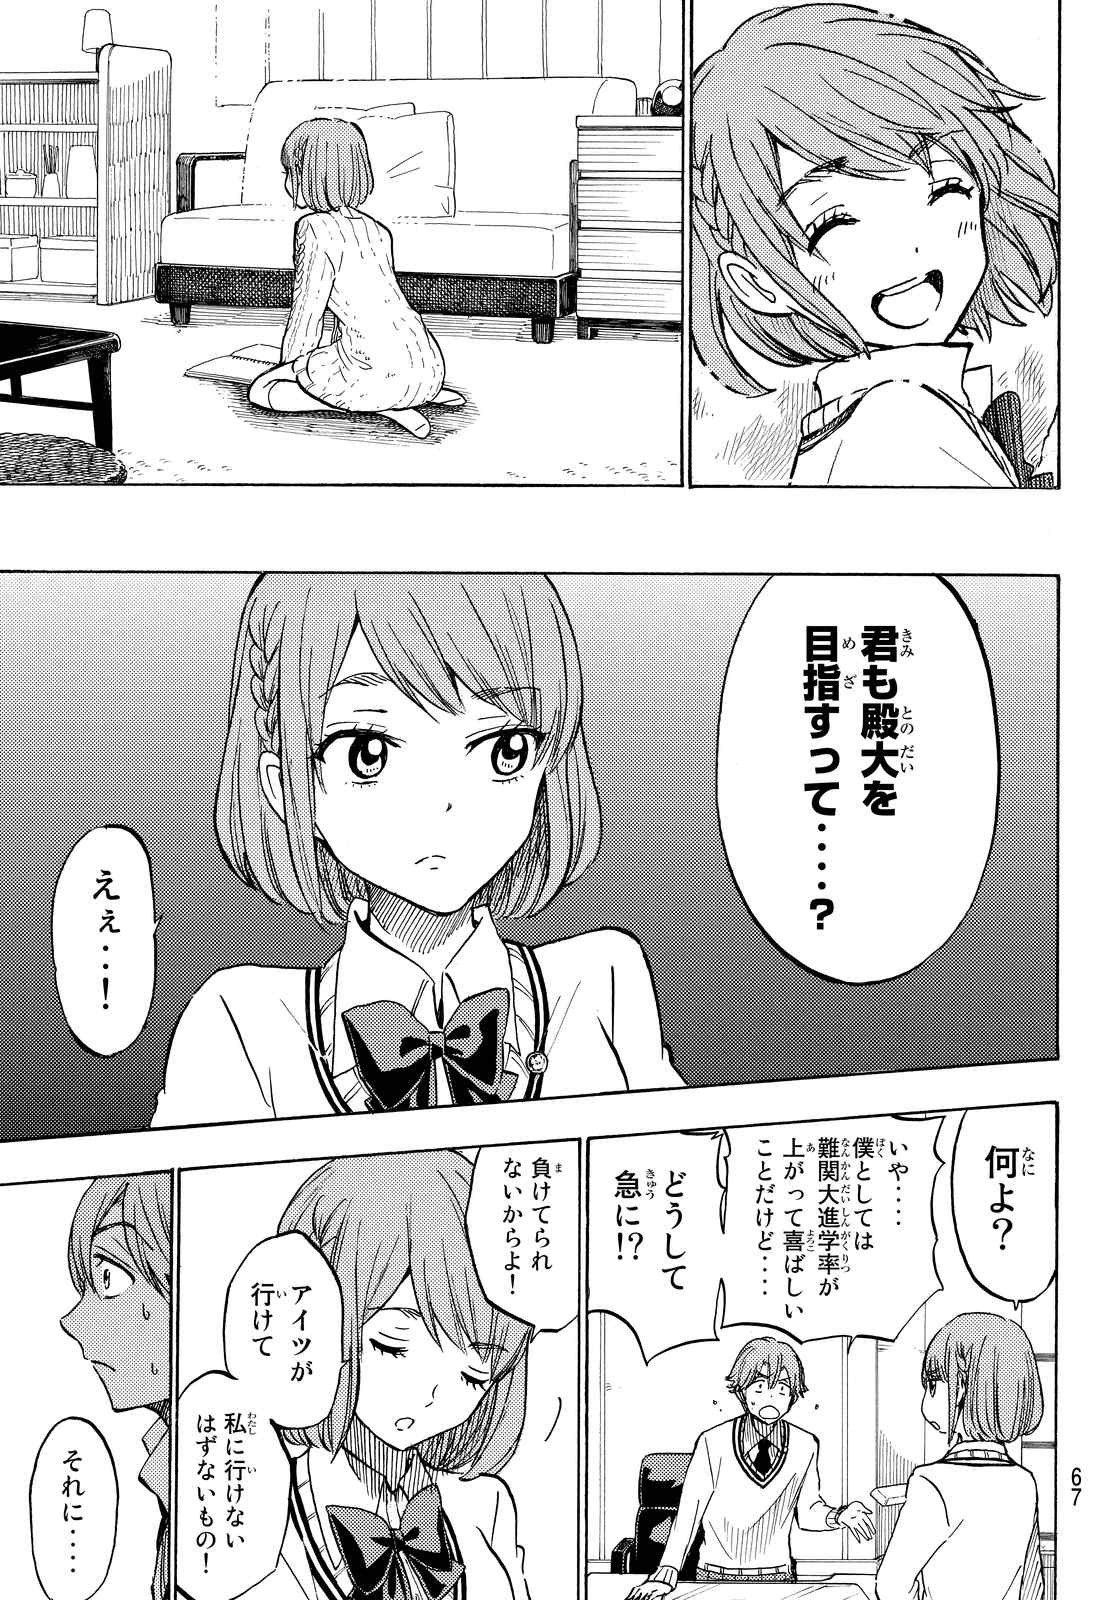 Yamada-kun to 7-nin no Majo - Chapter 233 - Page 19